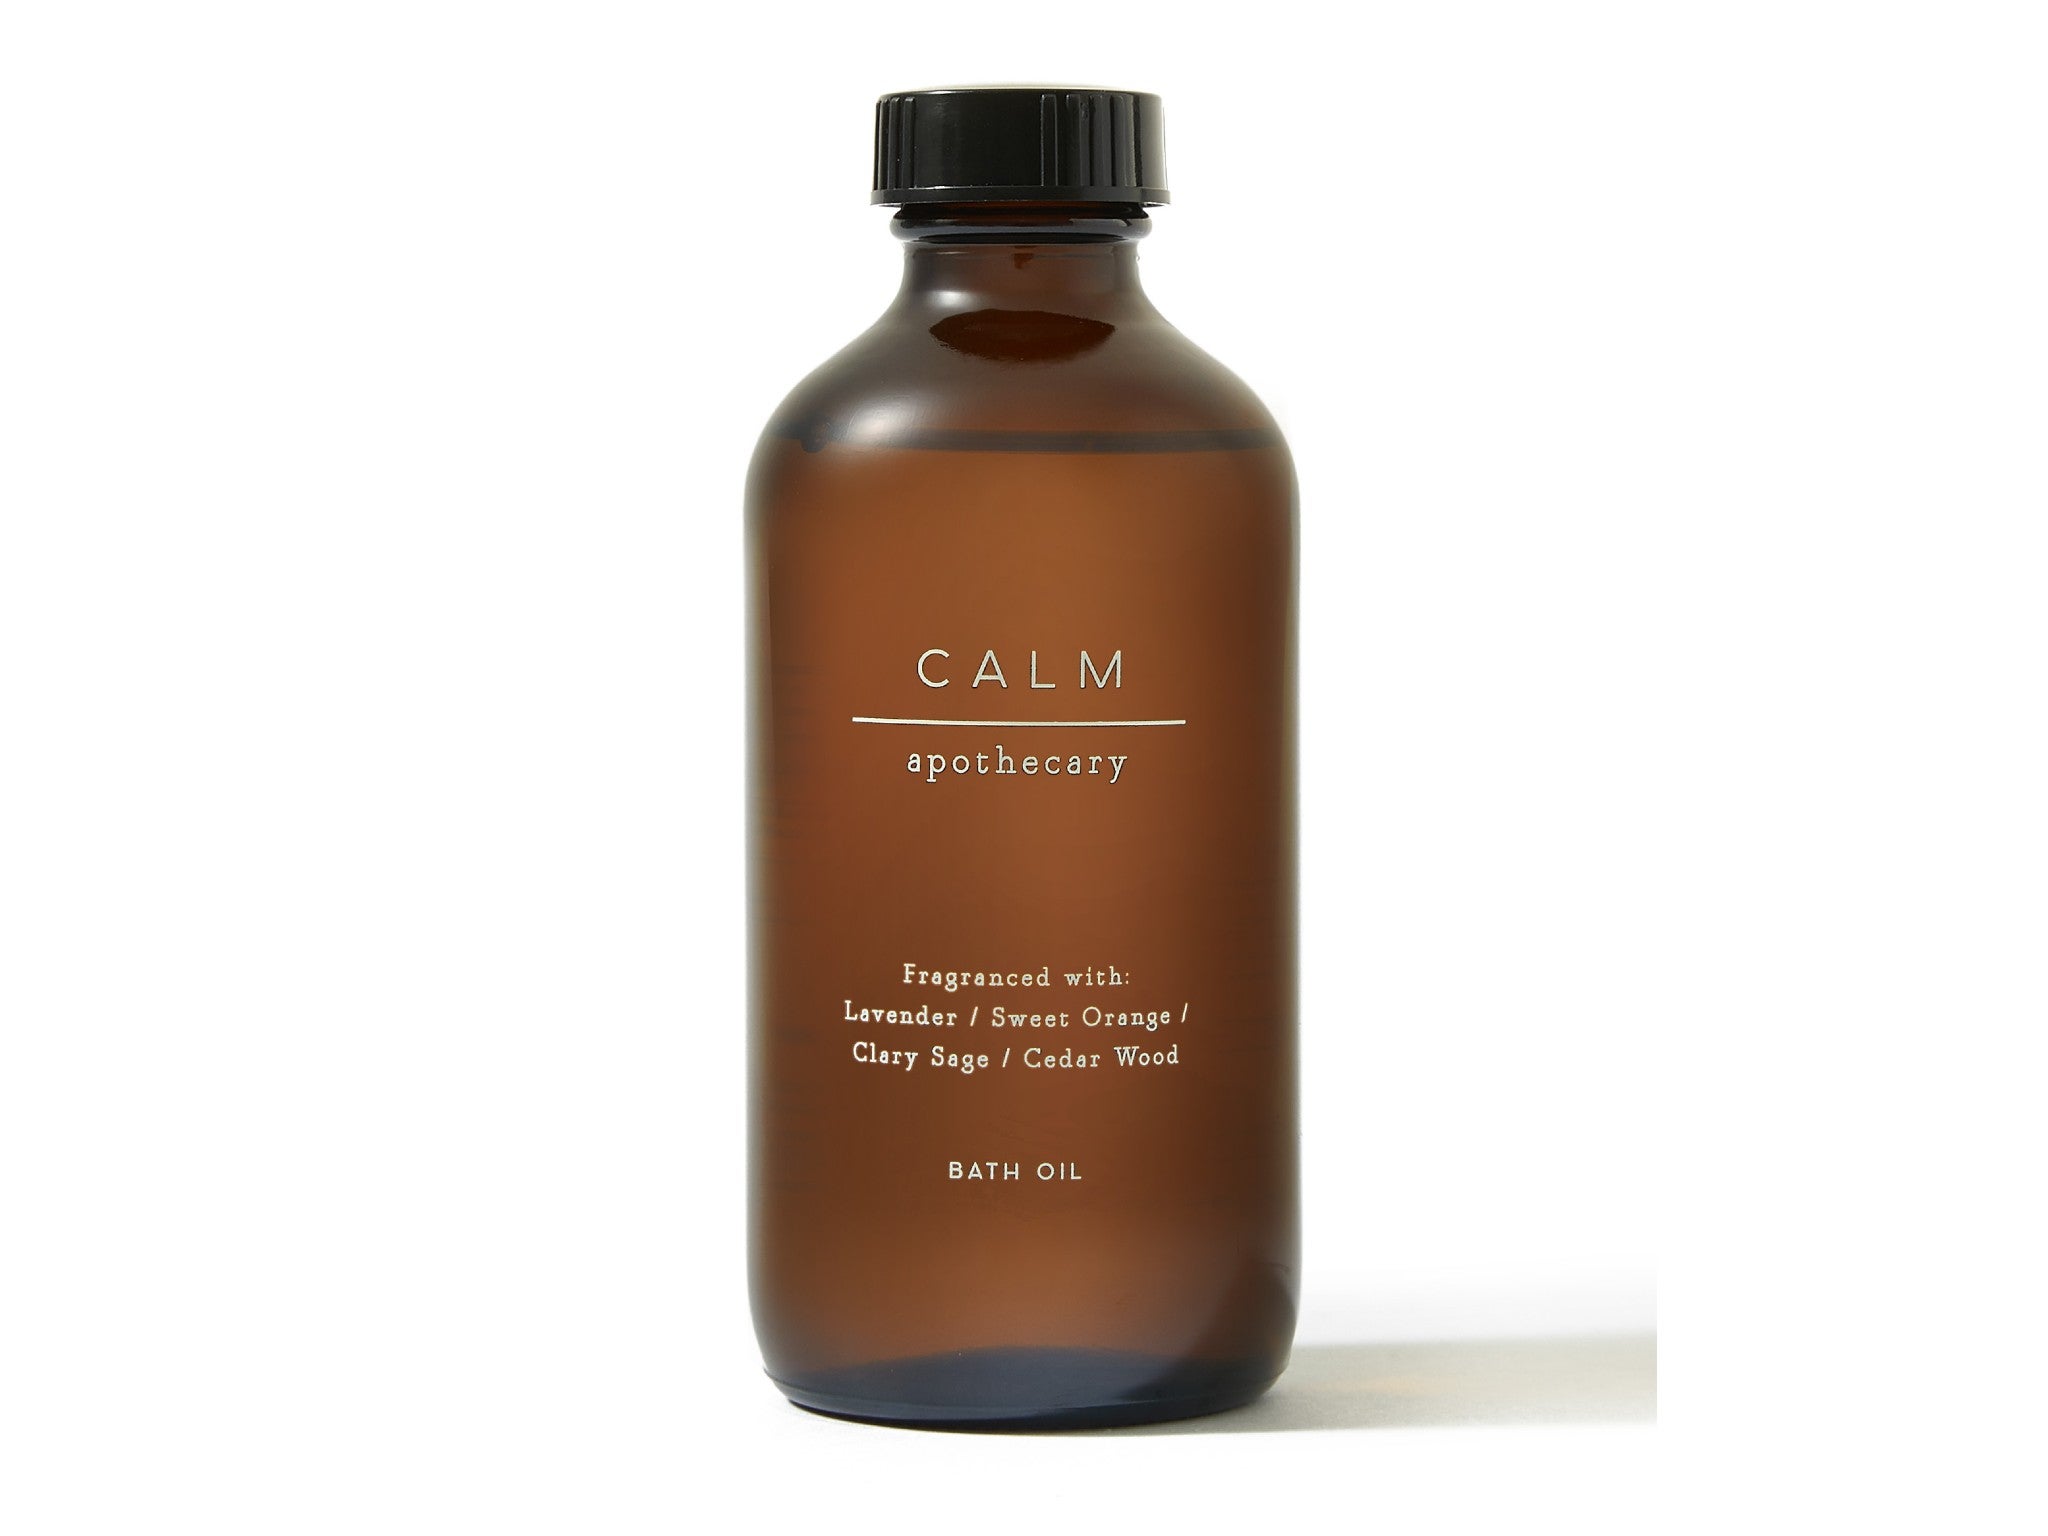 Marks & Spencer calm apothecary bath oil, 230ml indybest.jpeg